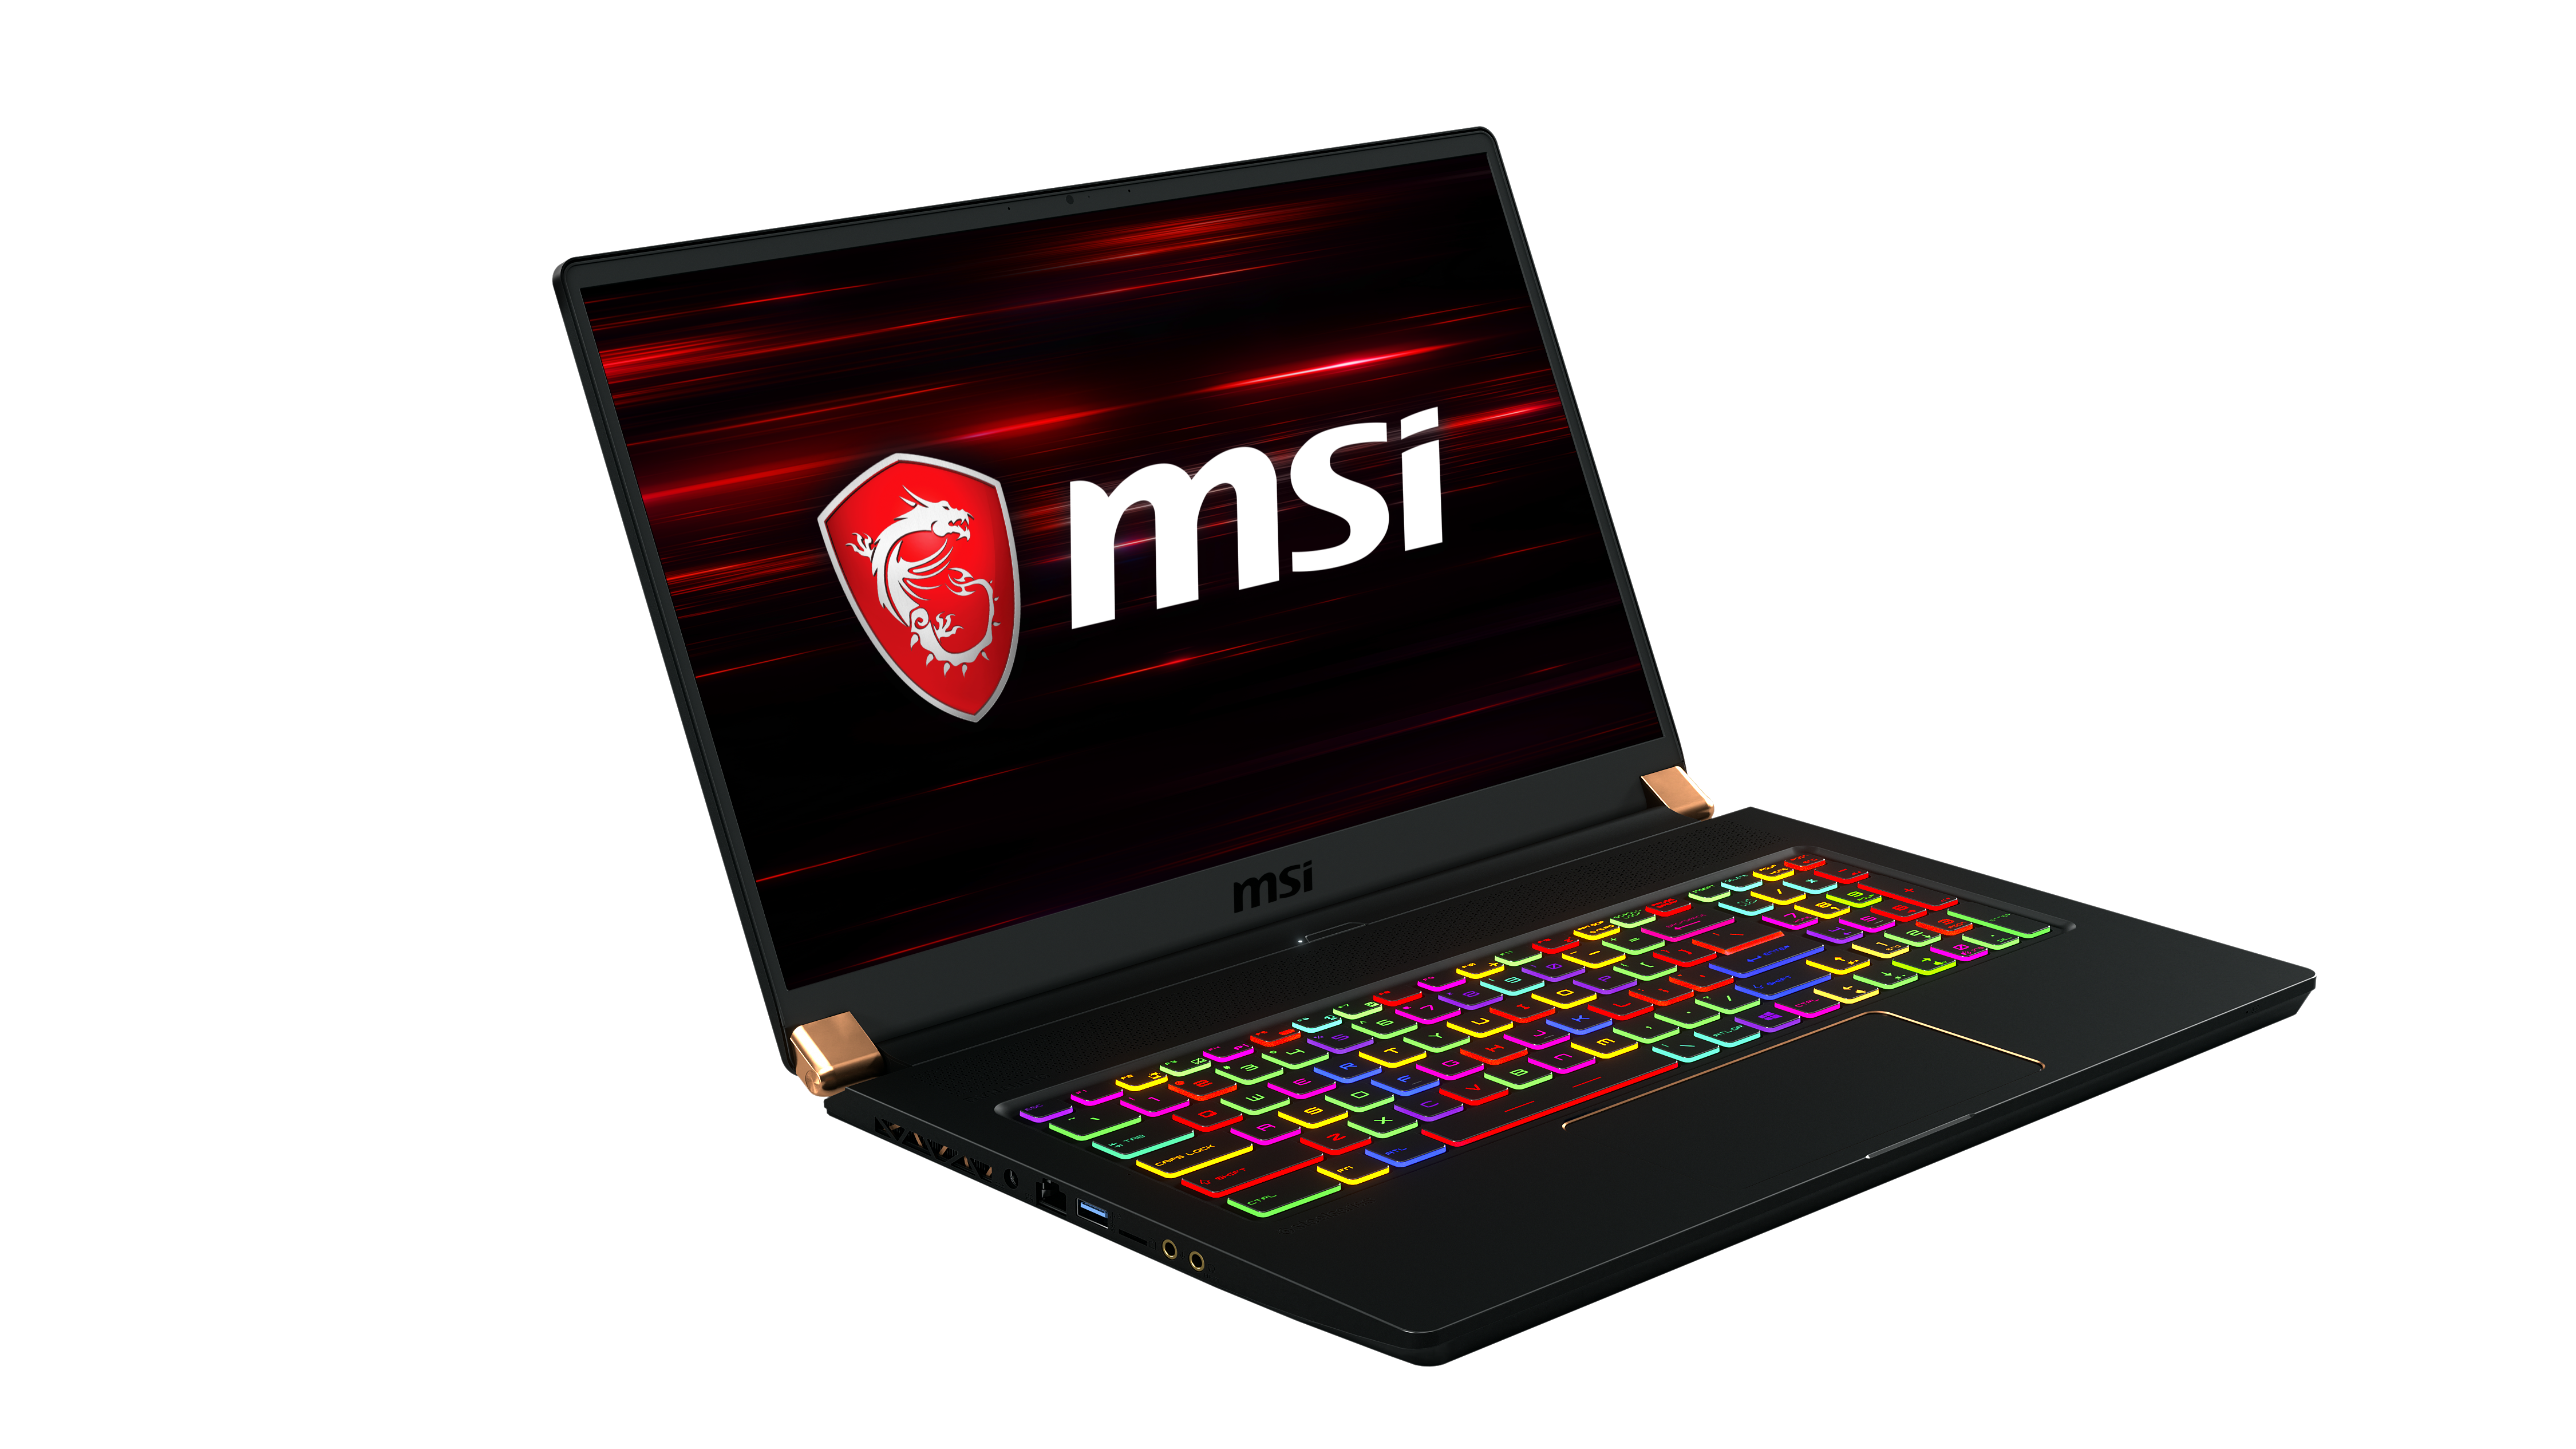 8gb 512gb. MSI gs75 Stealth. MS-17f6 MSI ноутбук. Ноутбук MSI gs75 Stealth 9sf. Ноутбуки MSI gs75 Stealth 10se.